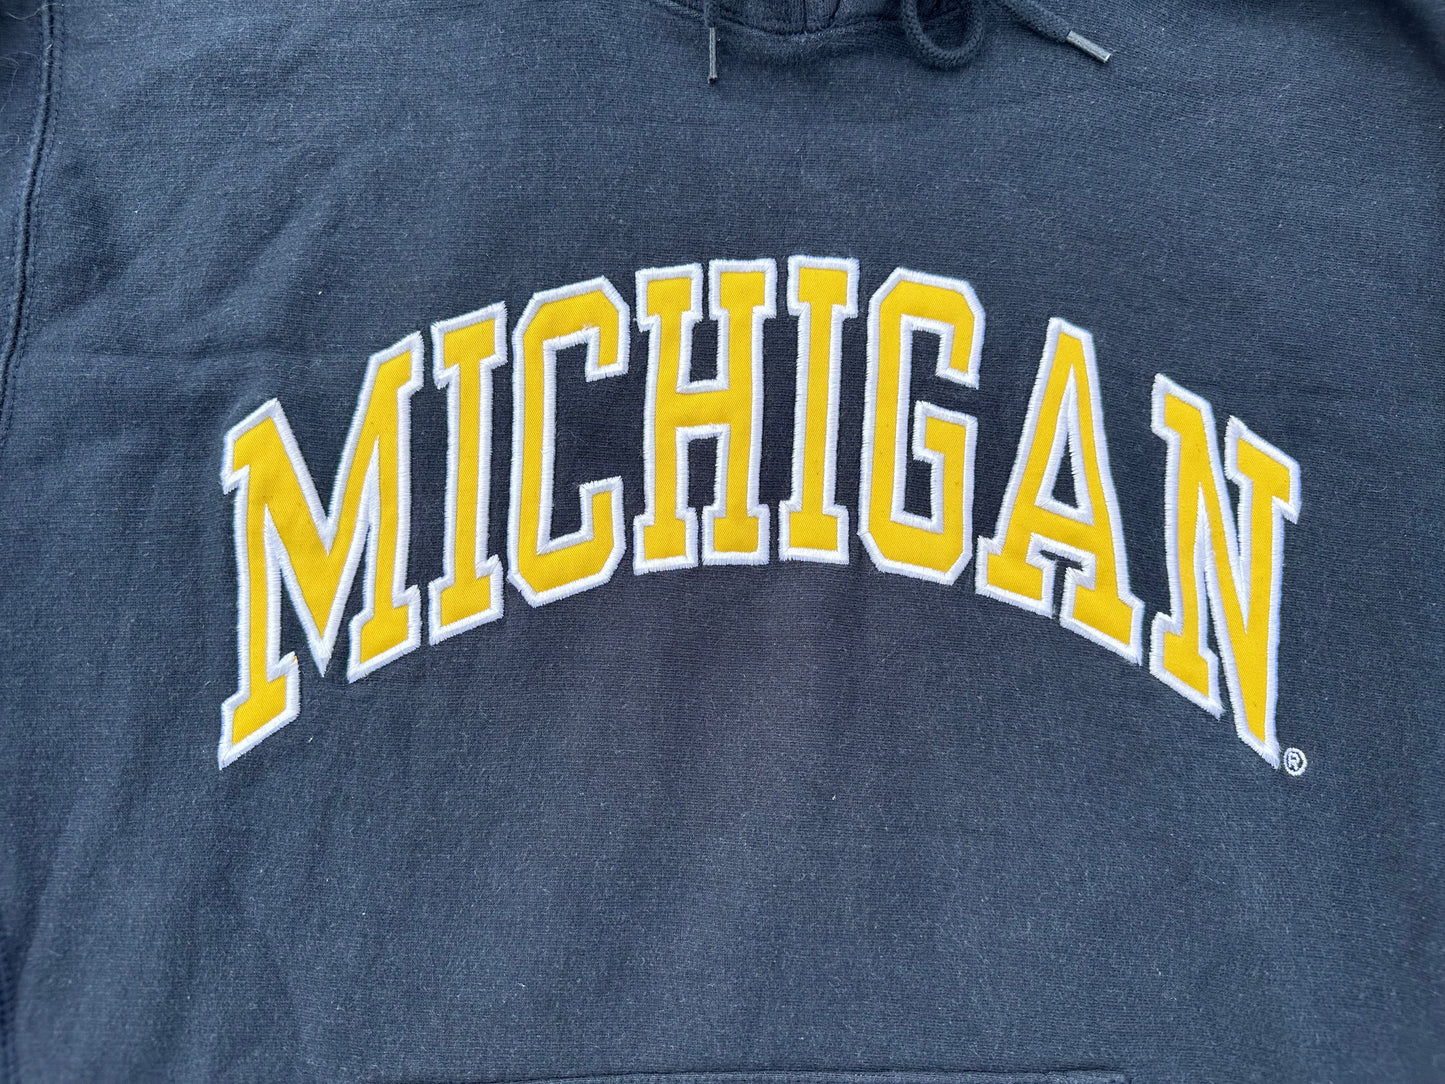 Michigan Embroidered Hoodie Sweatshirt